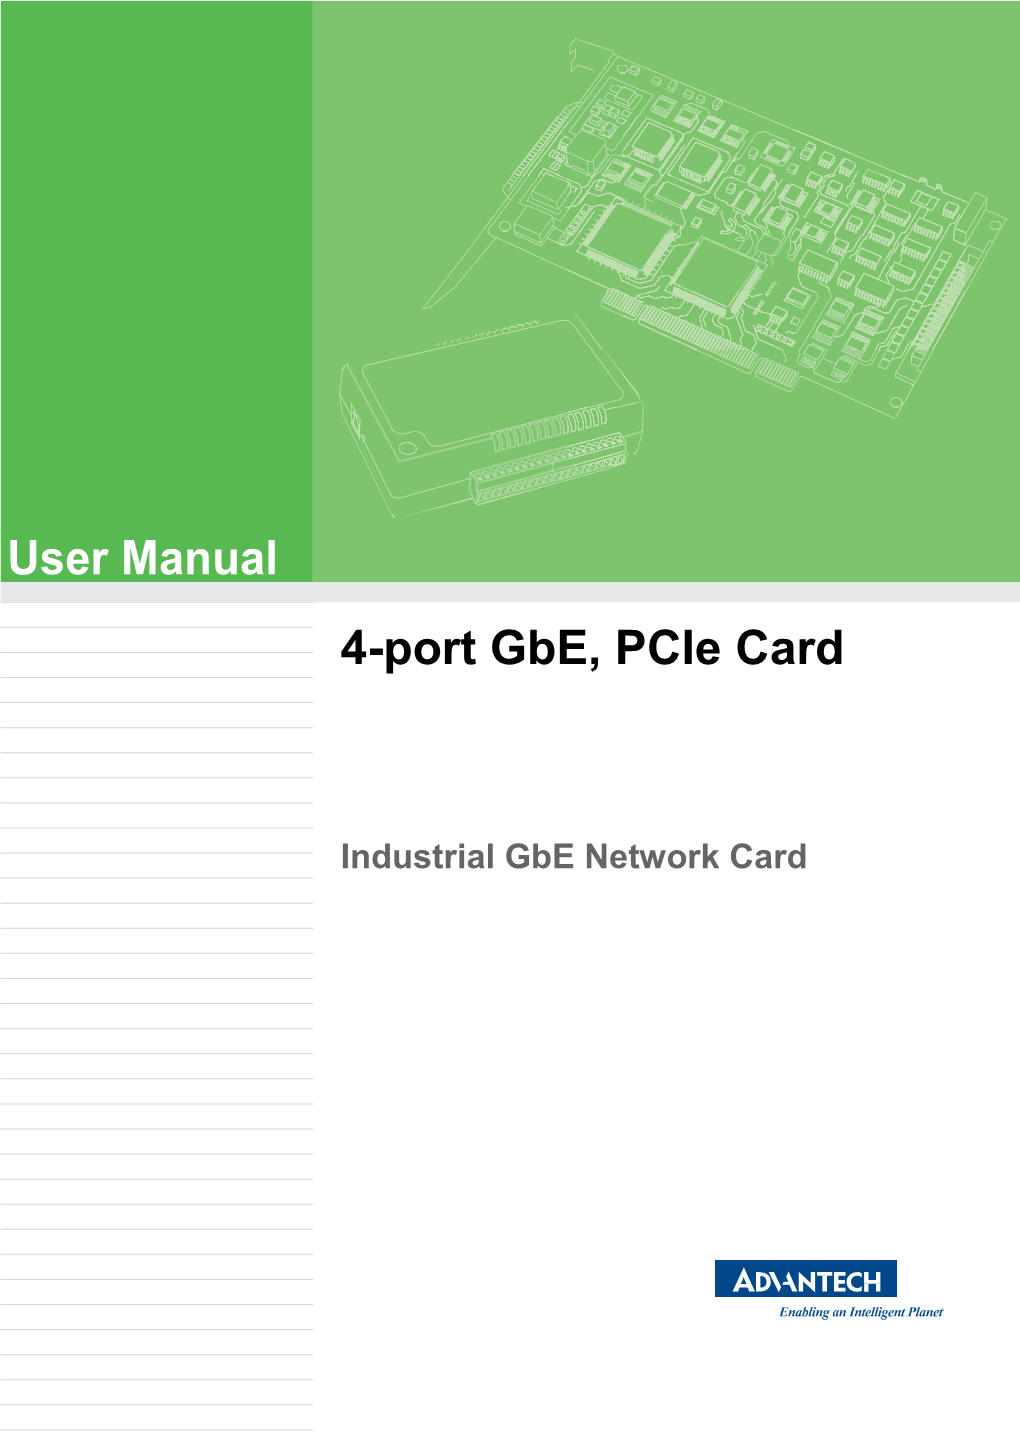 User Manual 4-Port Gbe, Pcie Card